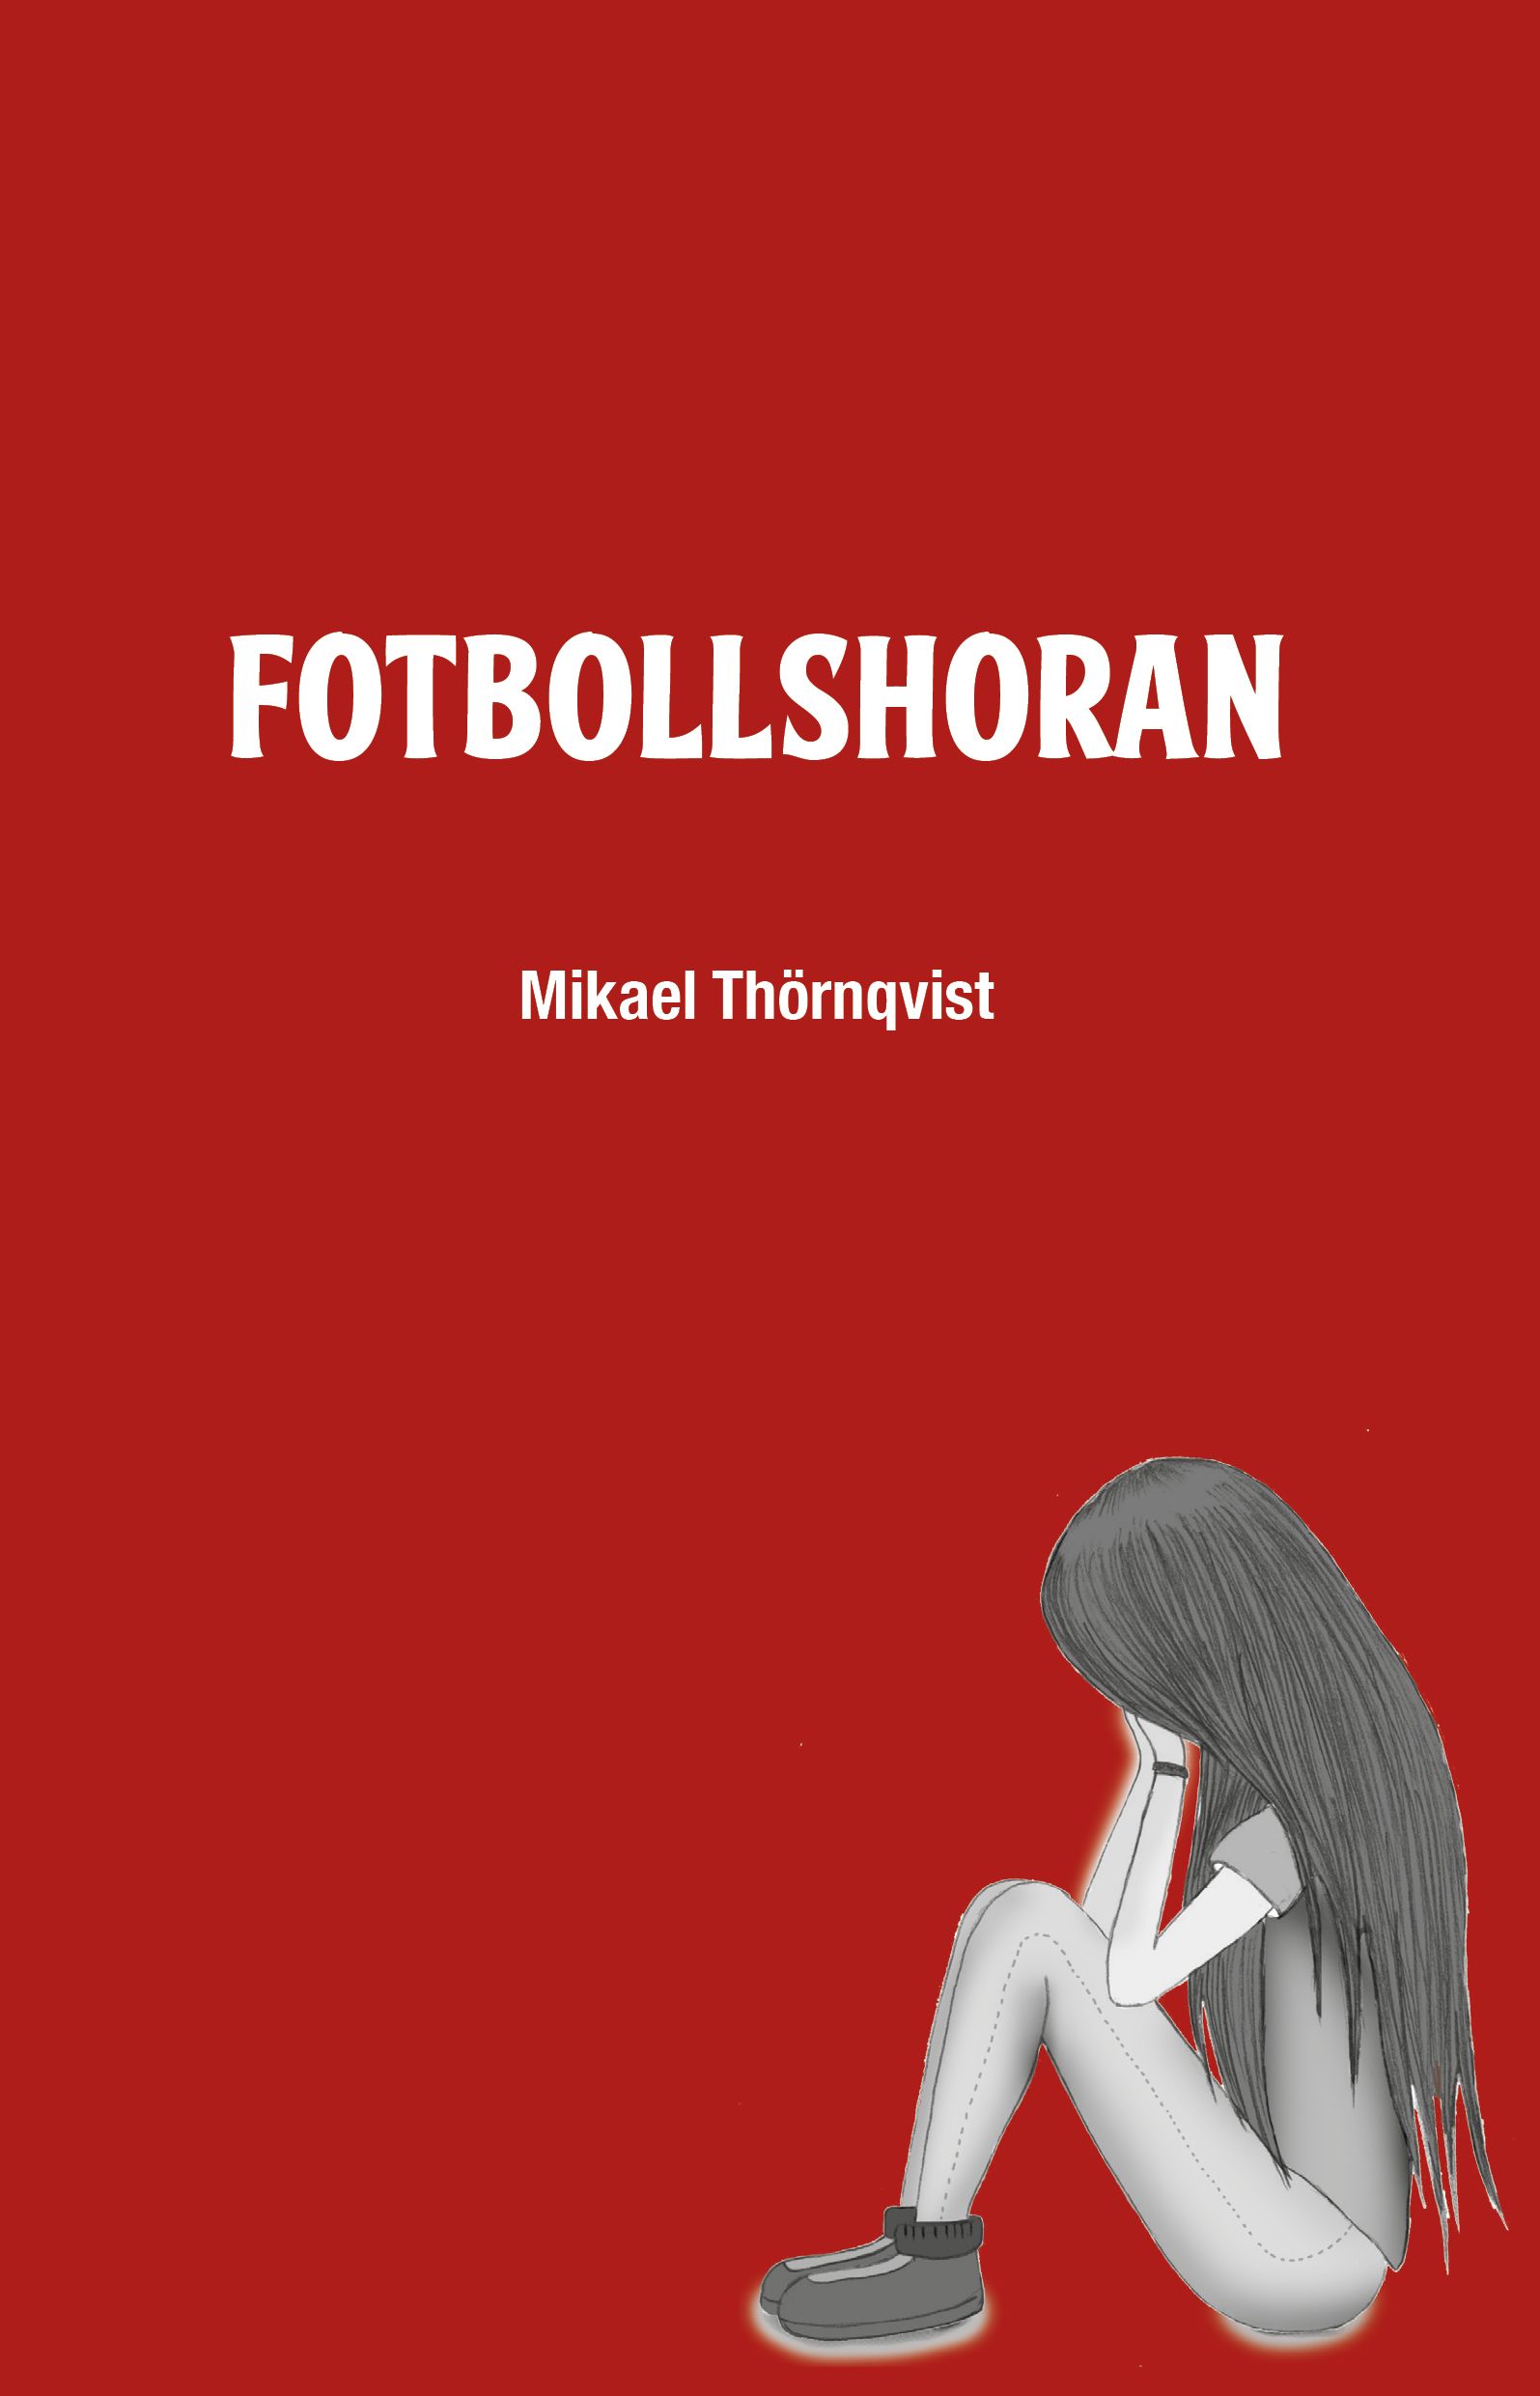 Fotbollshoran, eBook by Mikael Thörnqvist